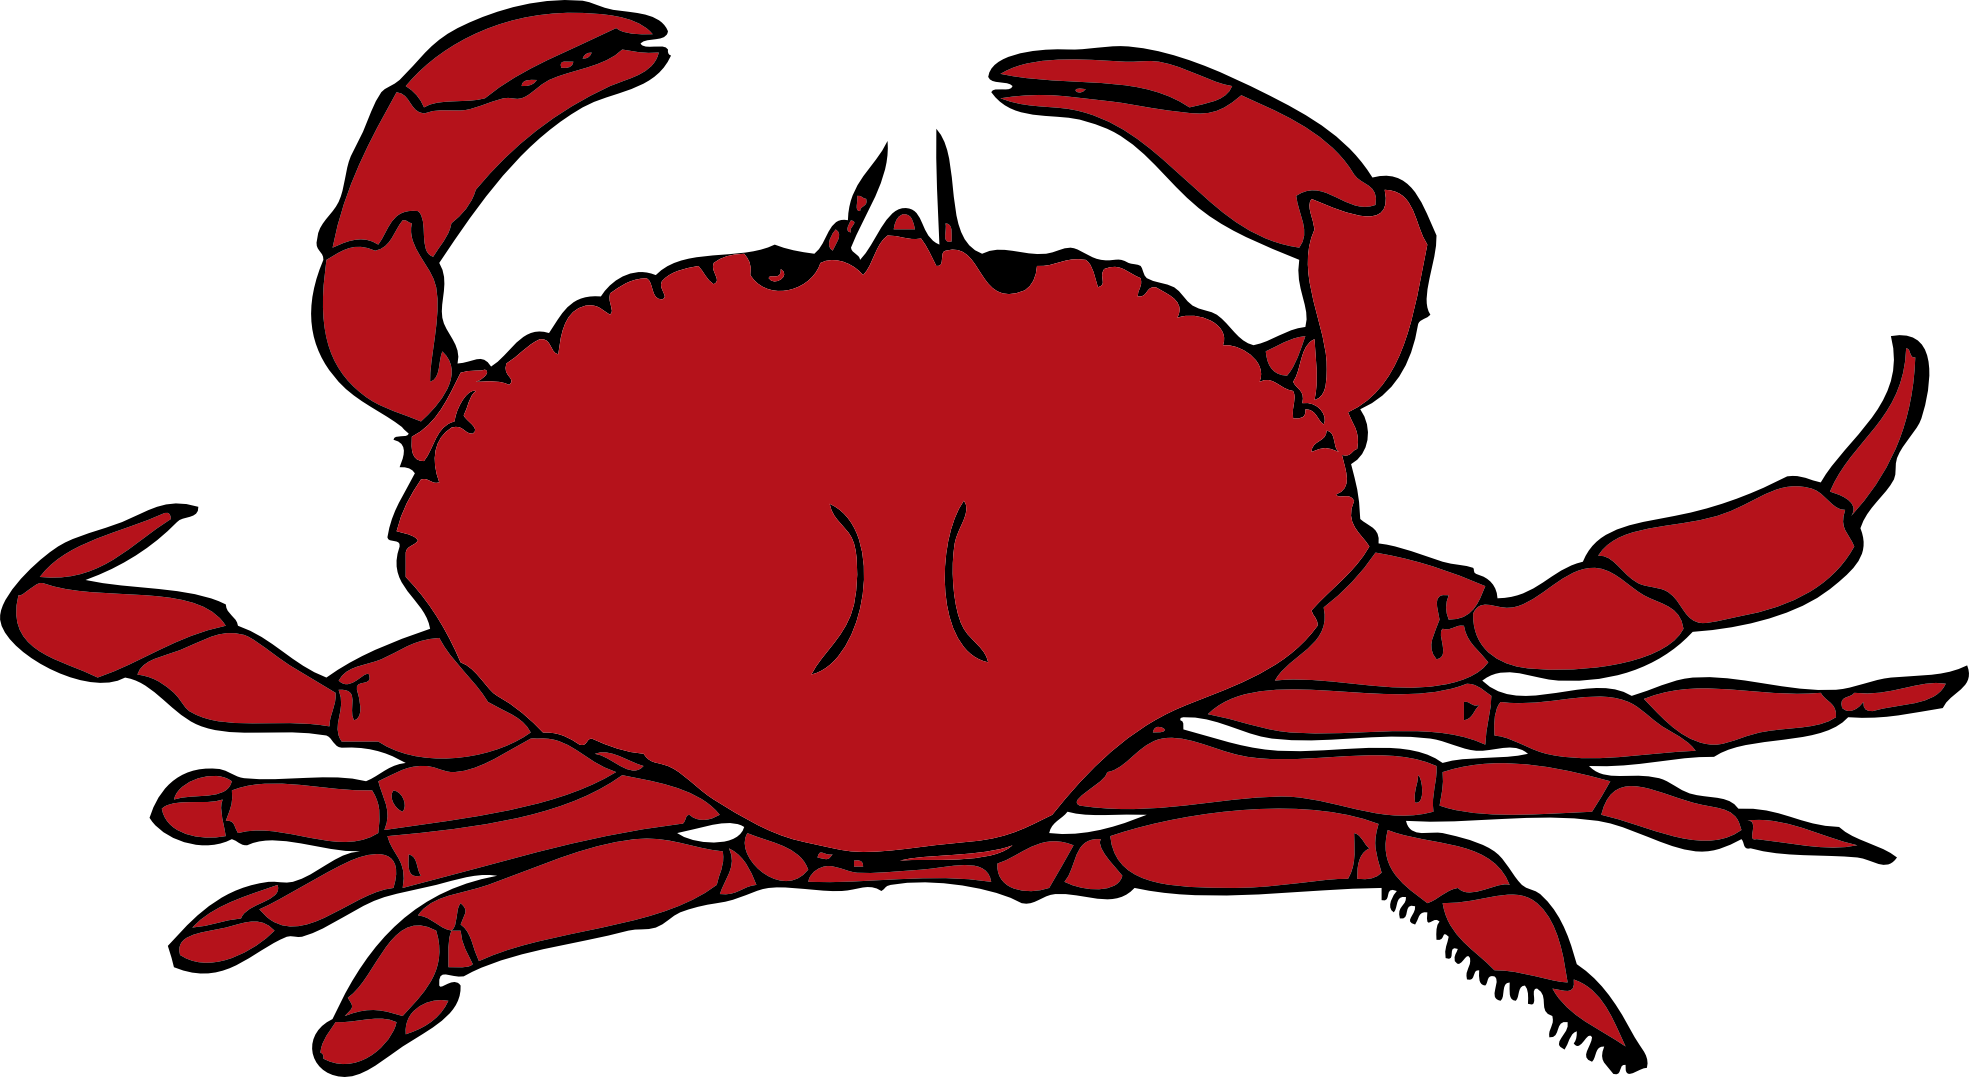 Crab clipart image